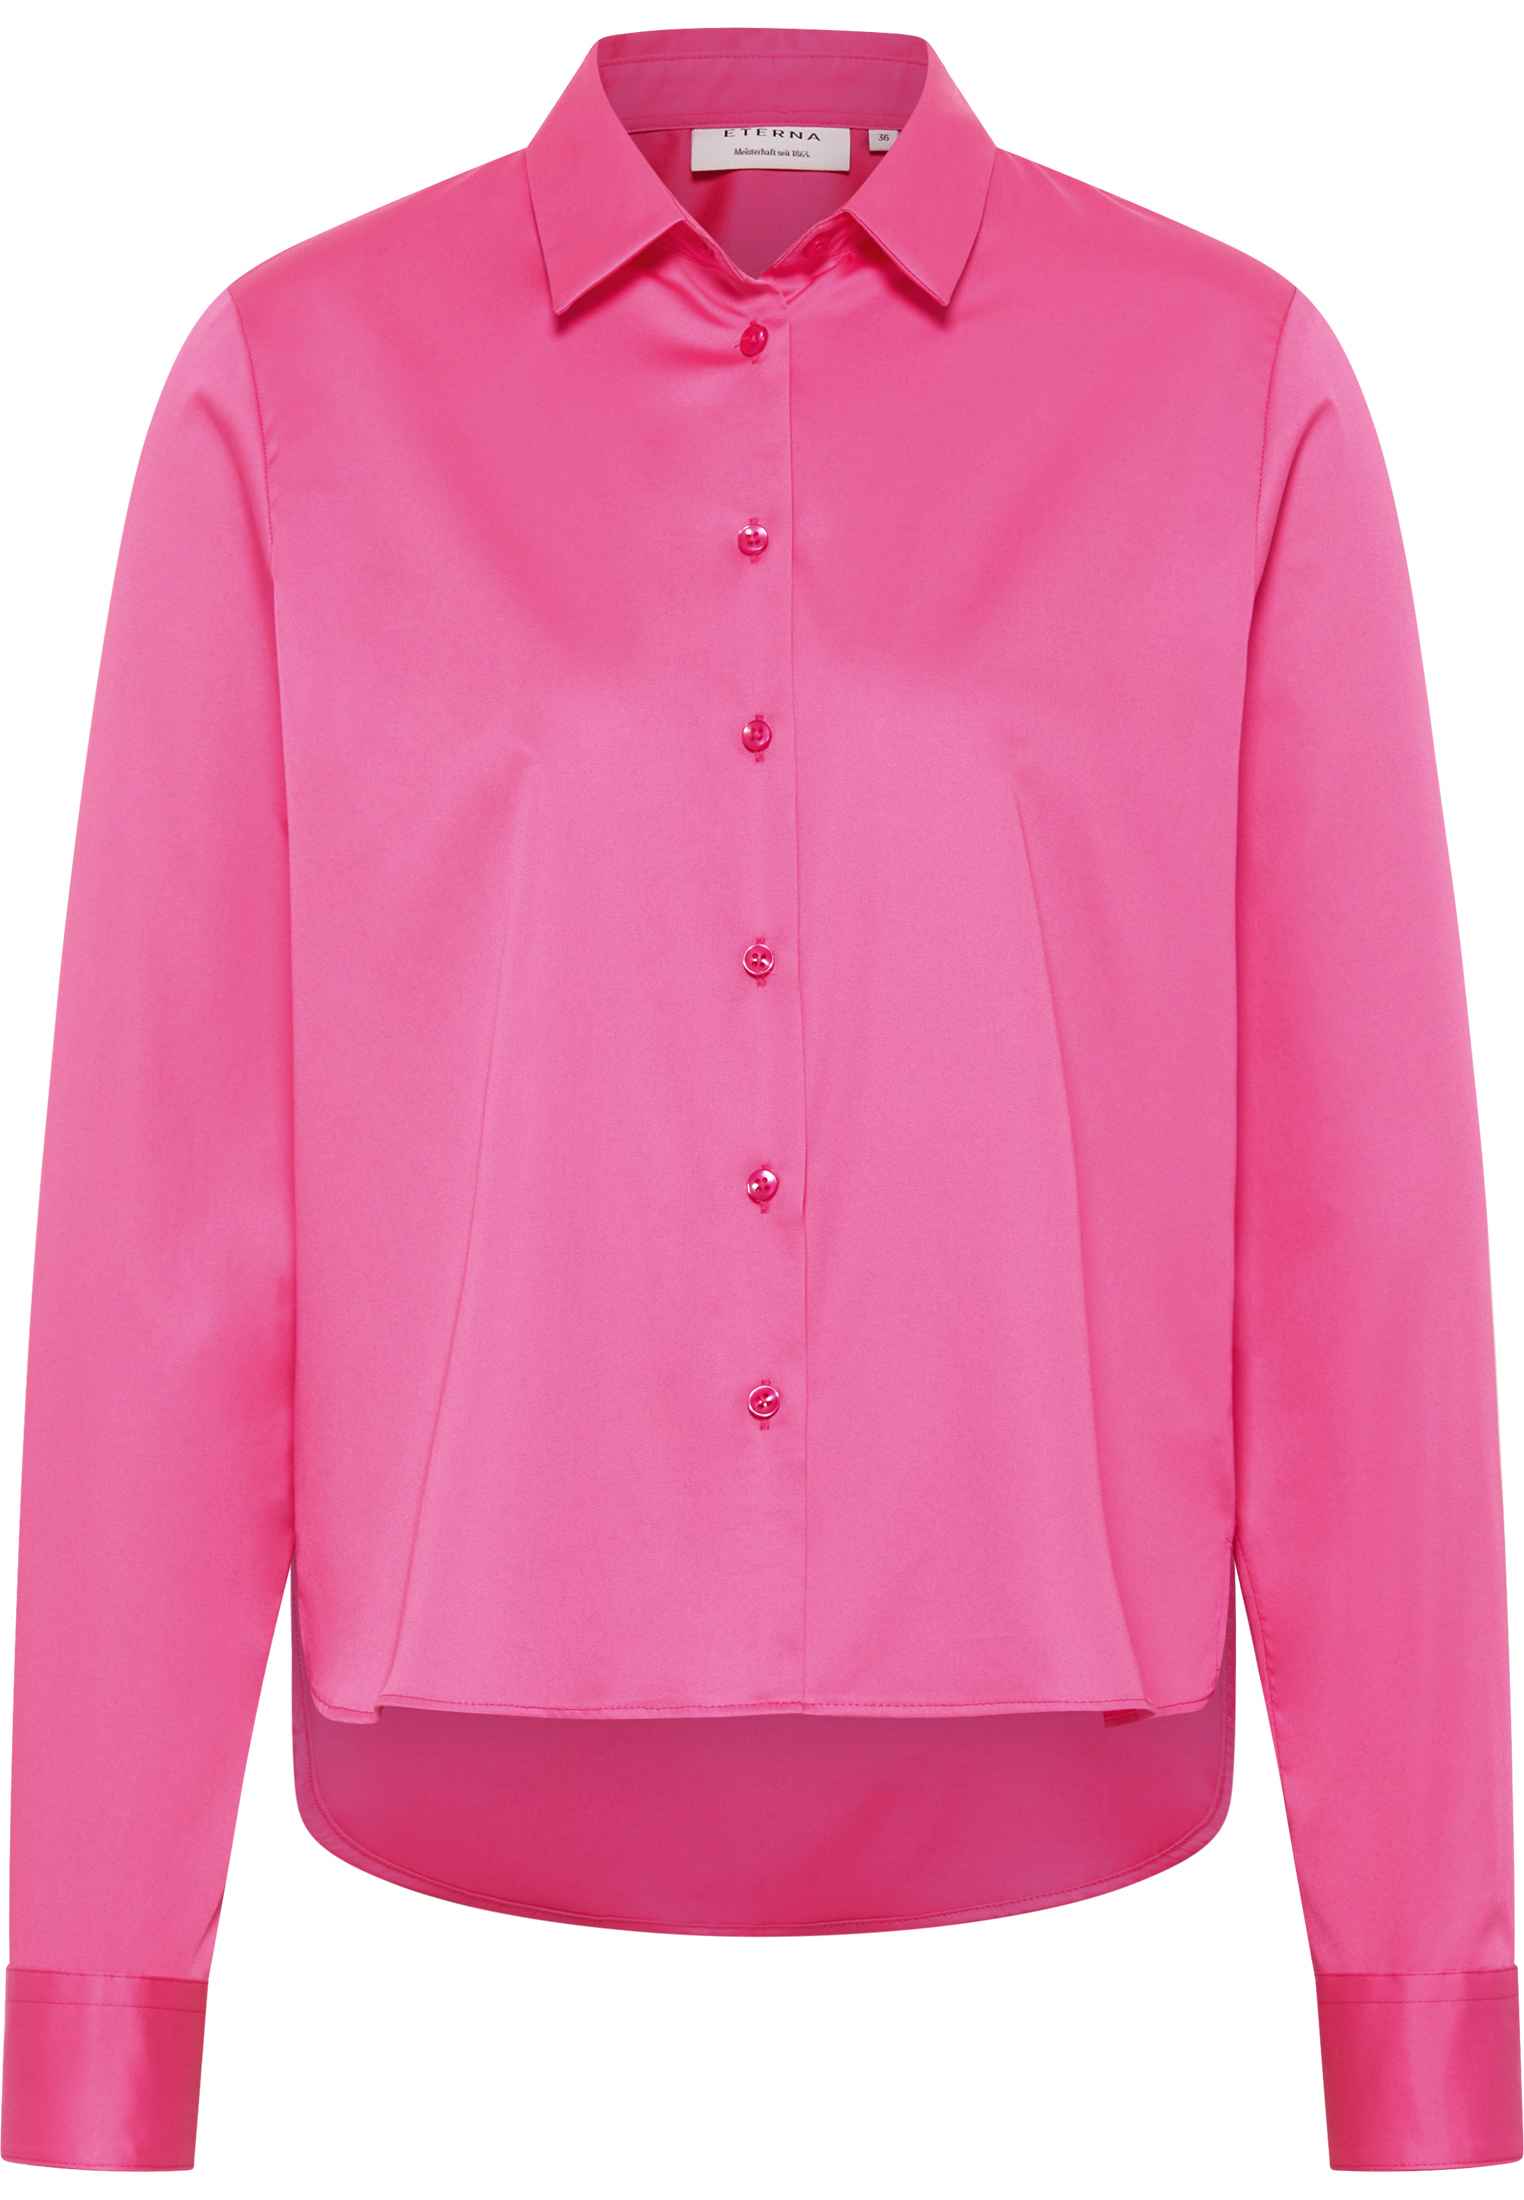 Satin Shirt Blouse in 52 | plain pink | pink 2BL04469-15-21-52-1/1 | long | sleeve